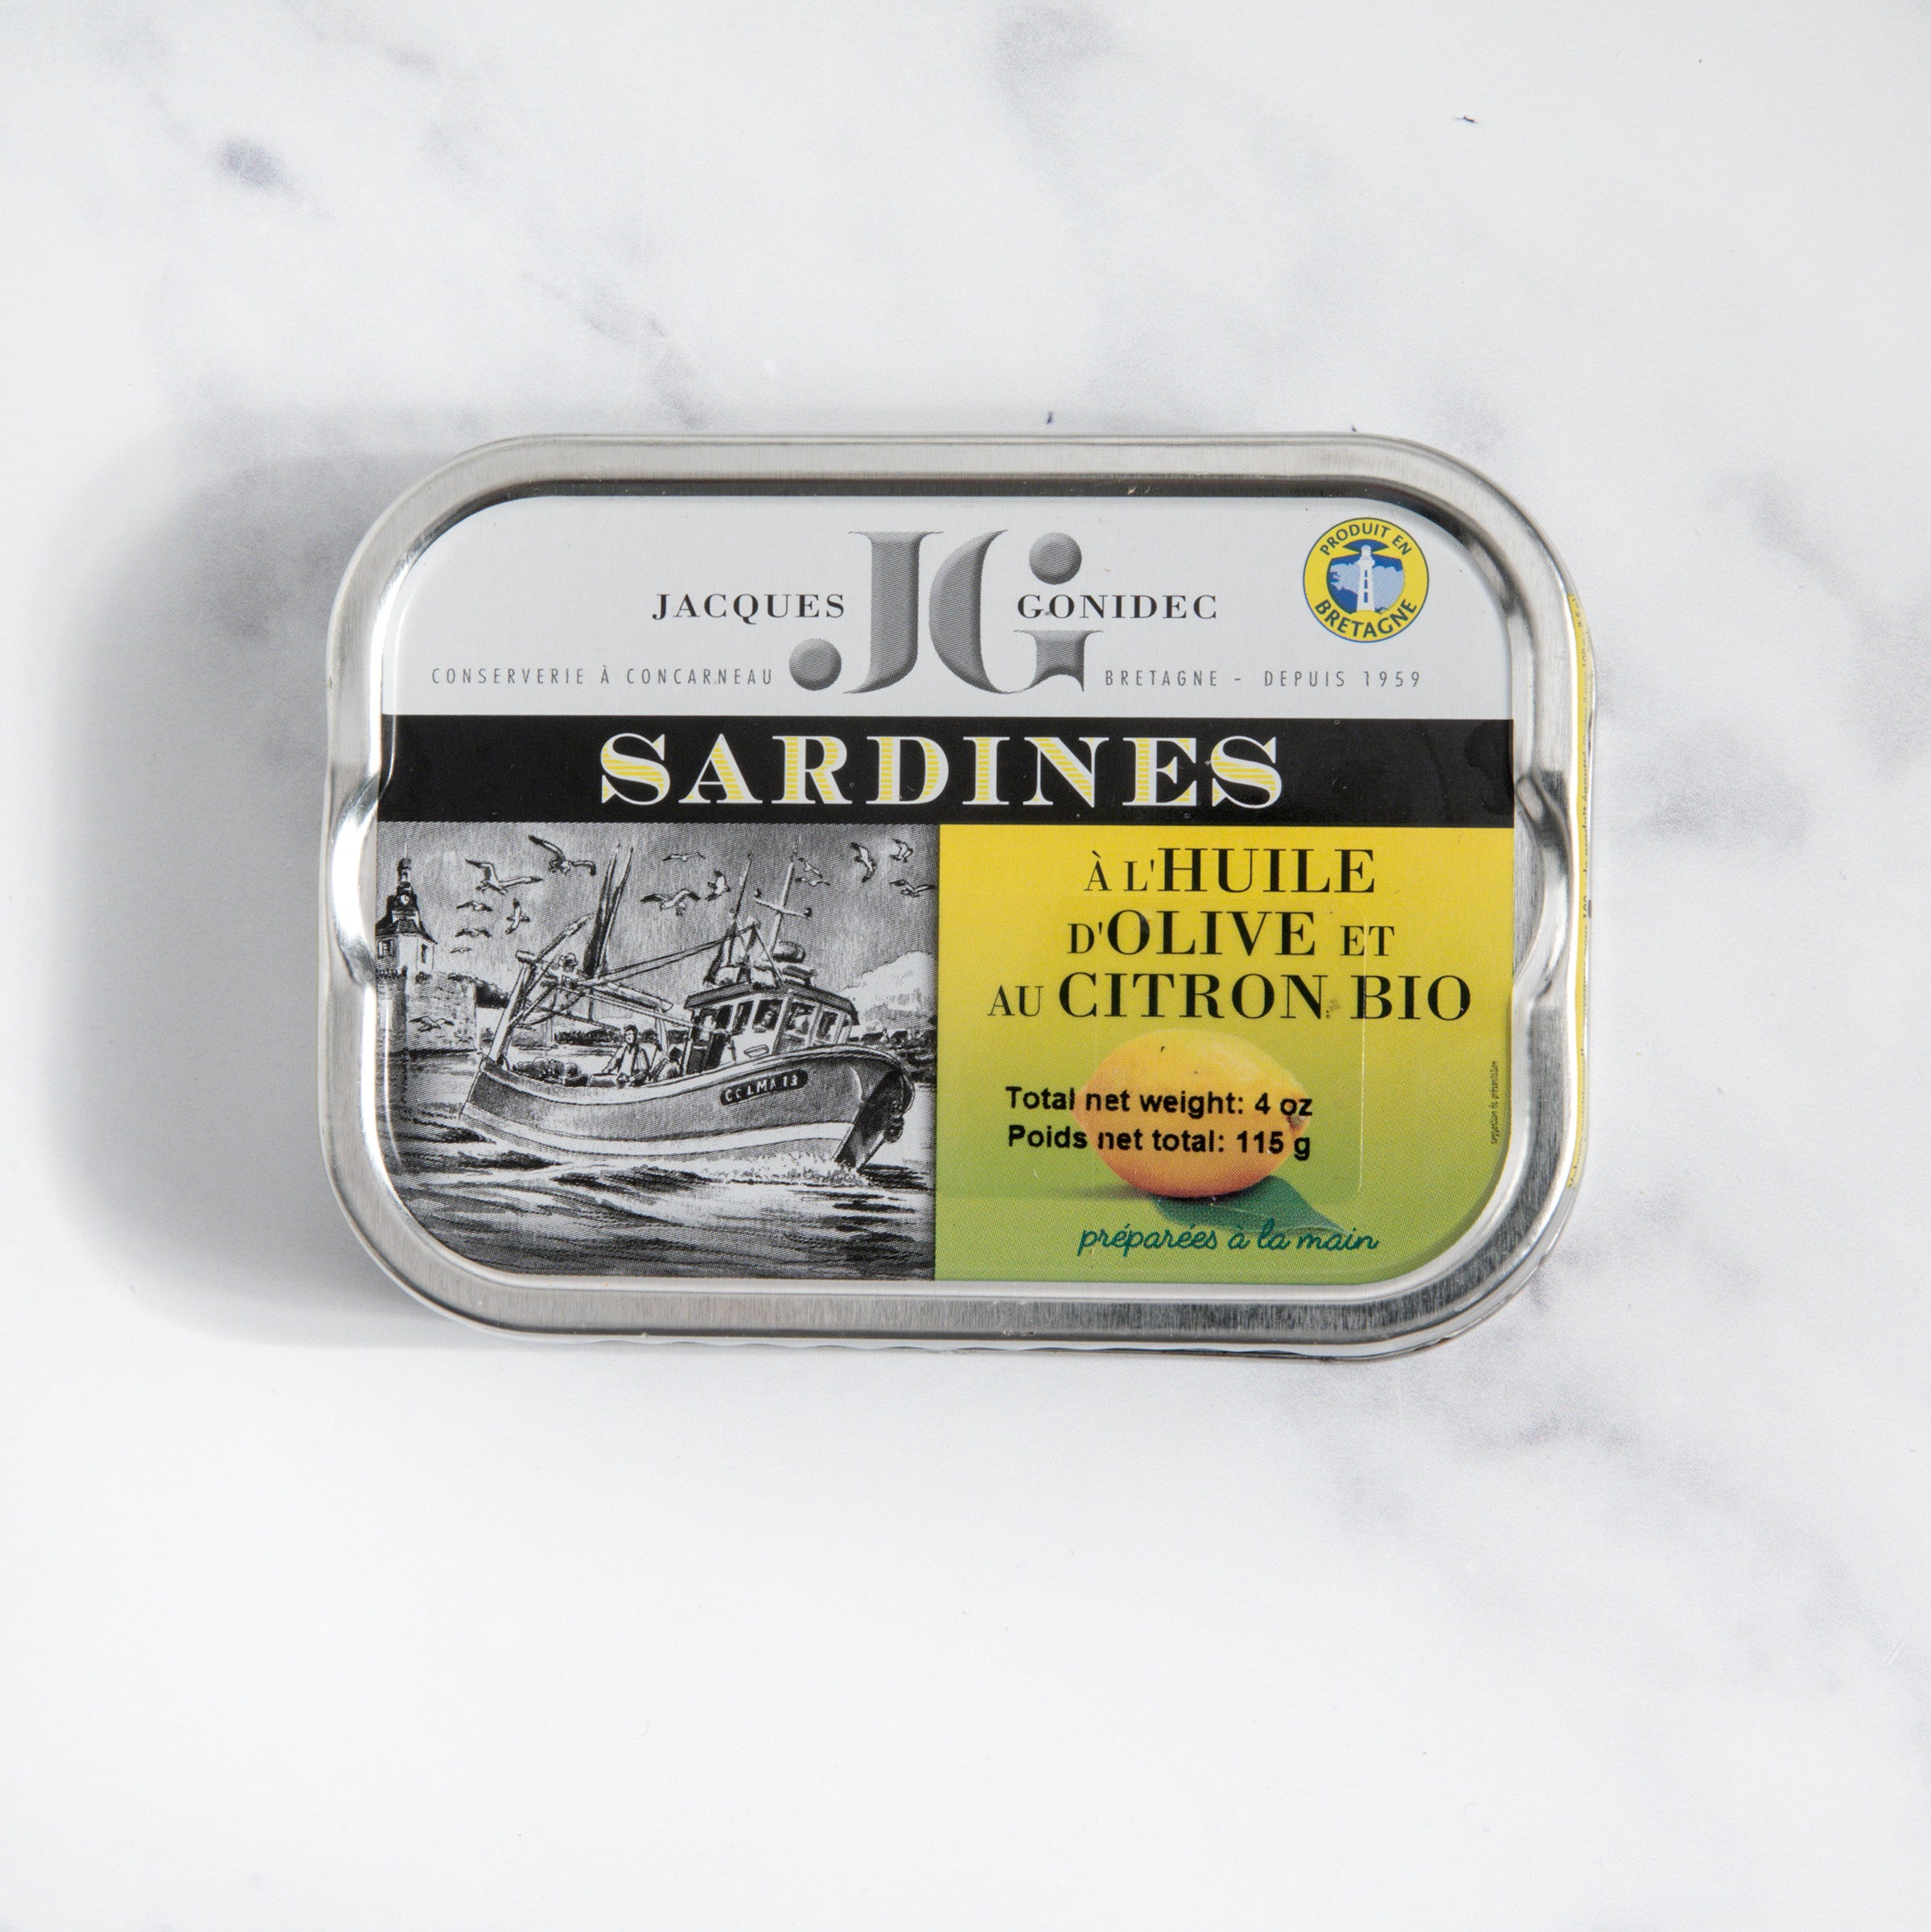 igourmet_7330_French Sardines_Gonidec_Anchovies & Sardines